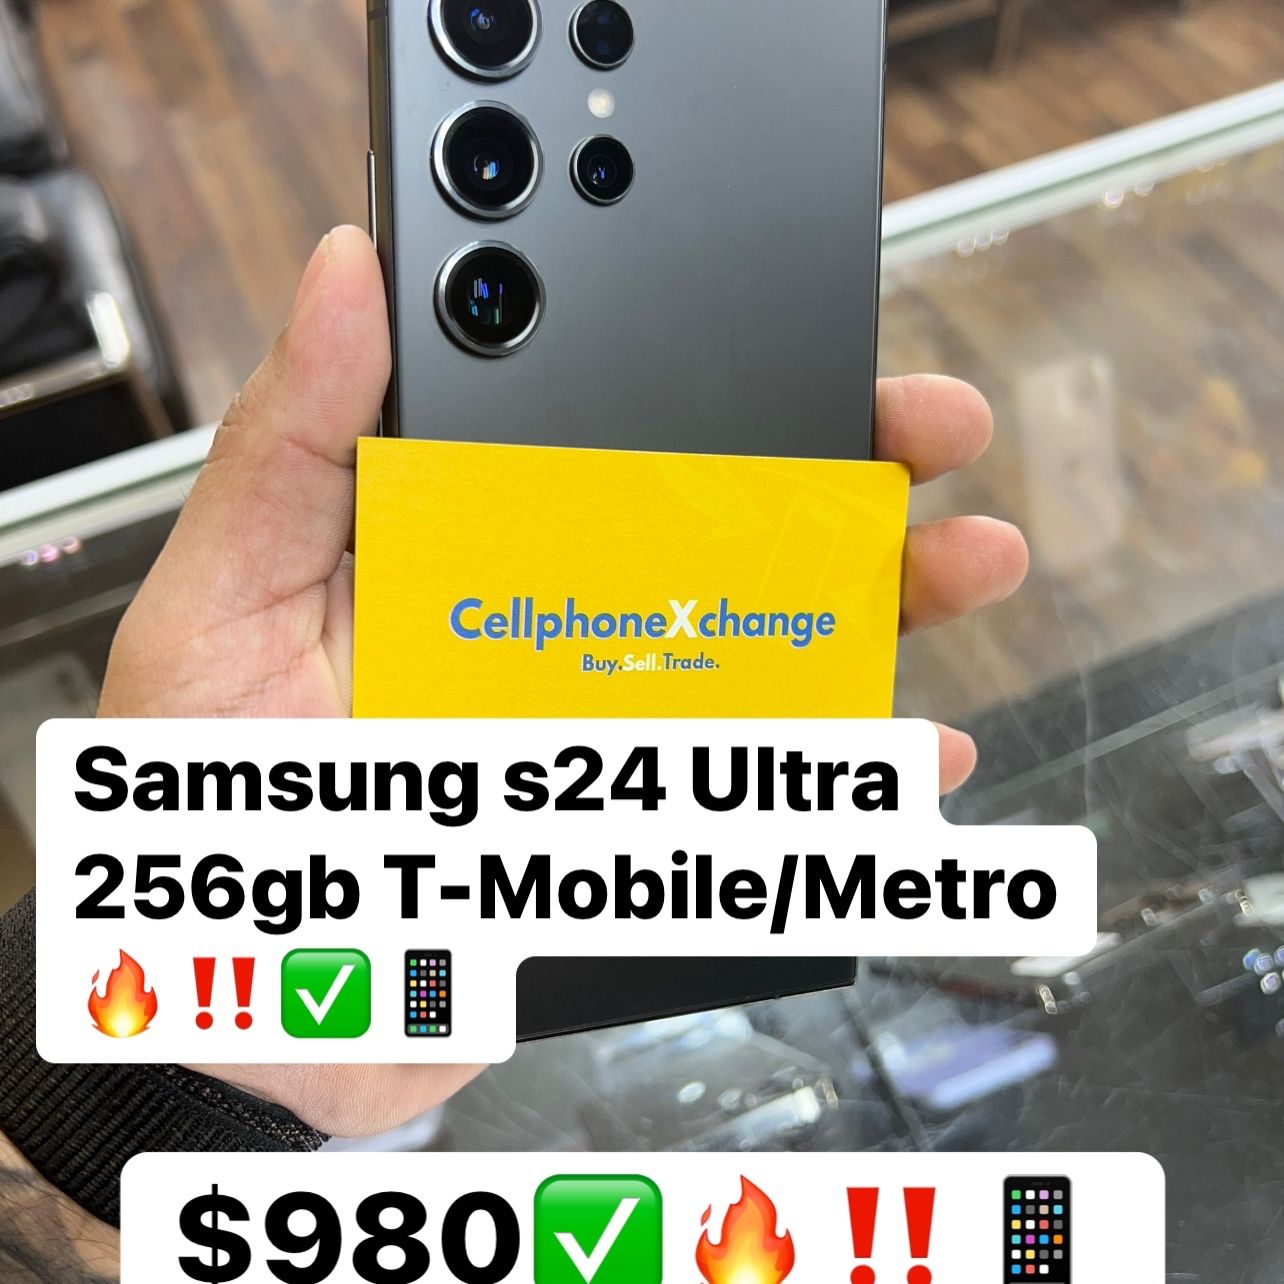 Samsung Galaxy S24 Ultra 256gb T-Mobile/Metro 